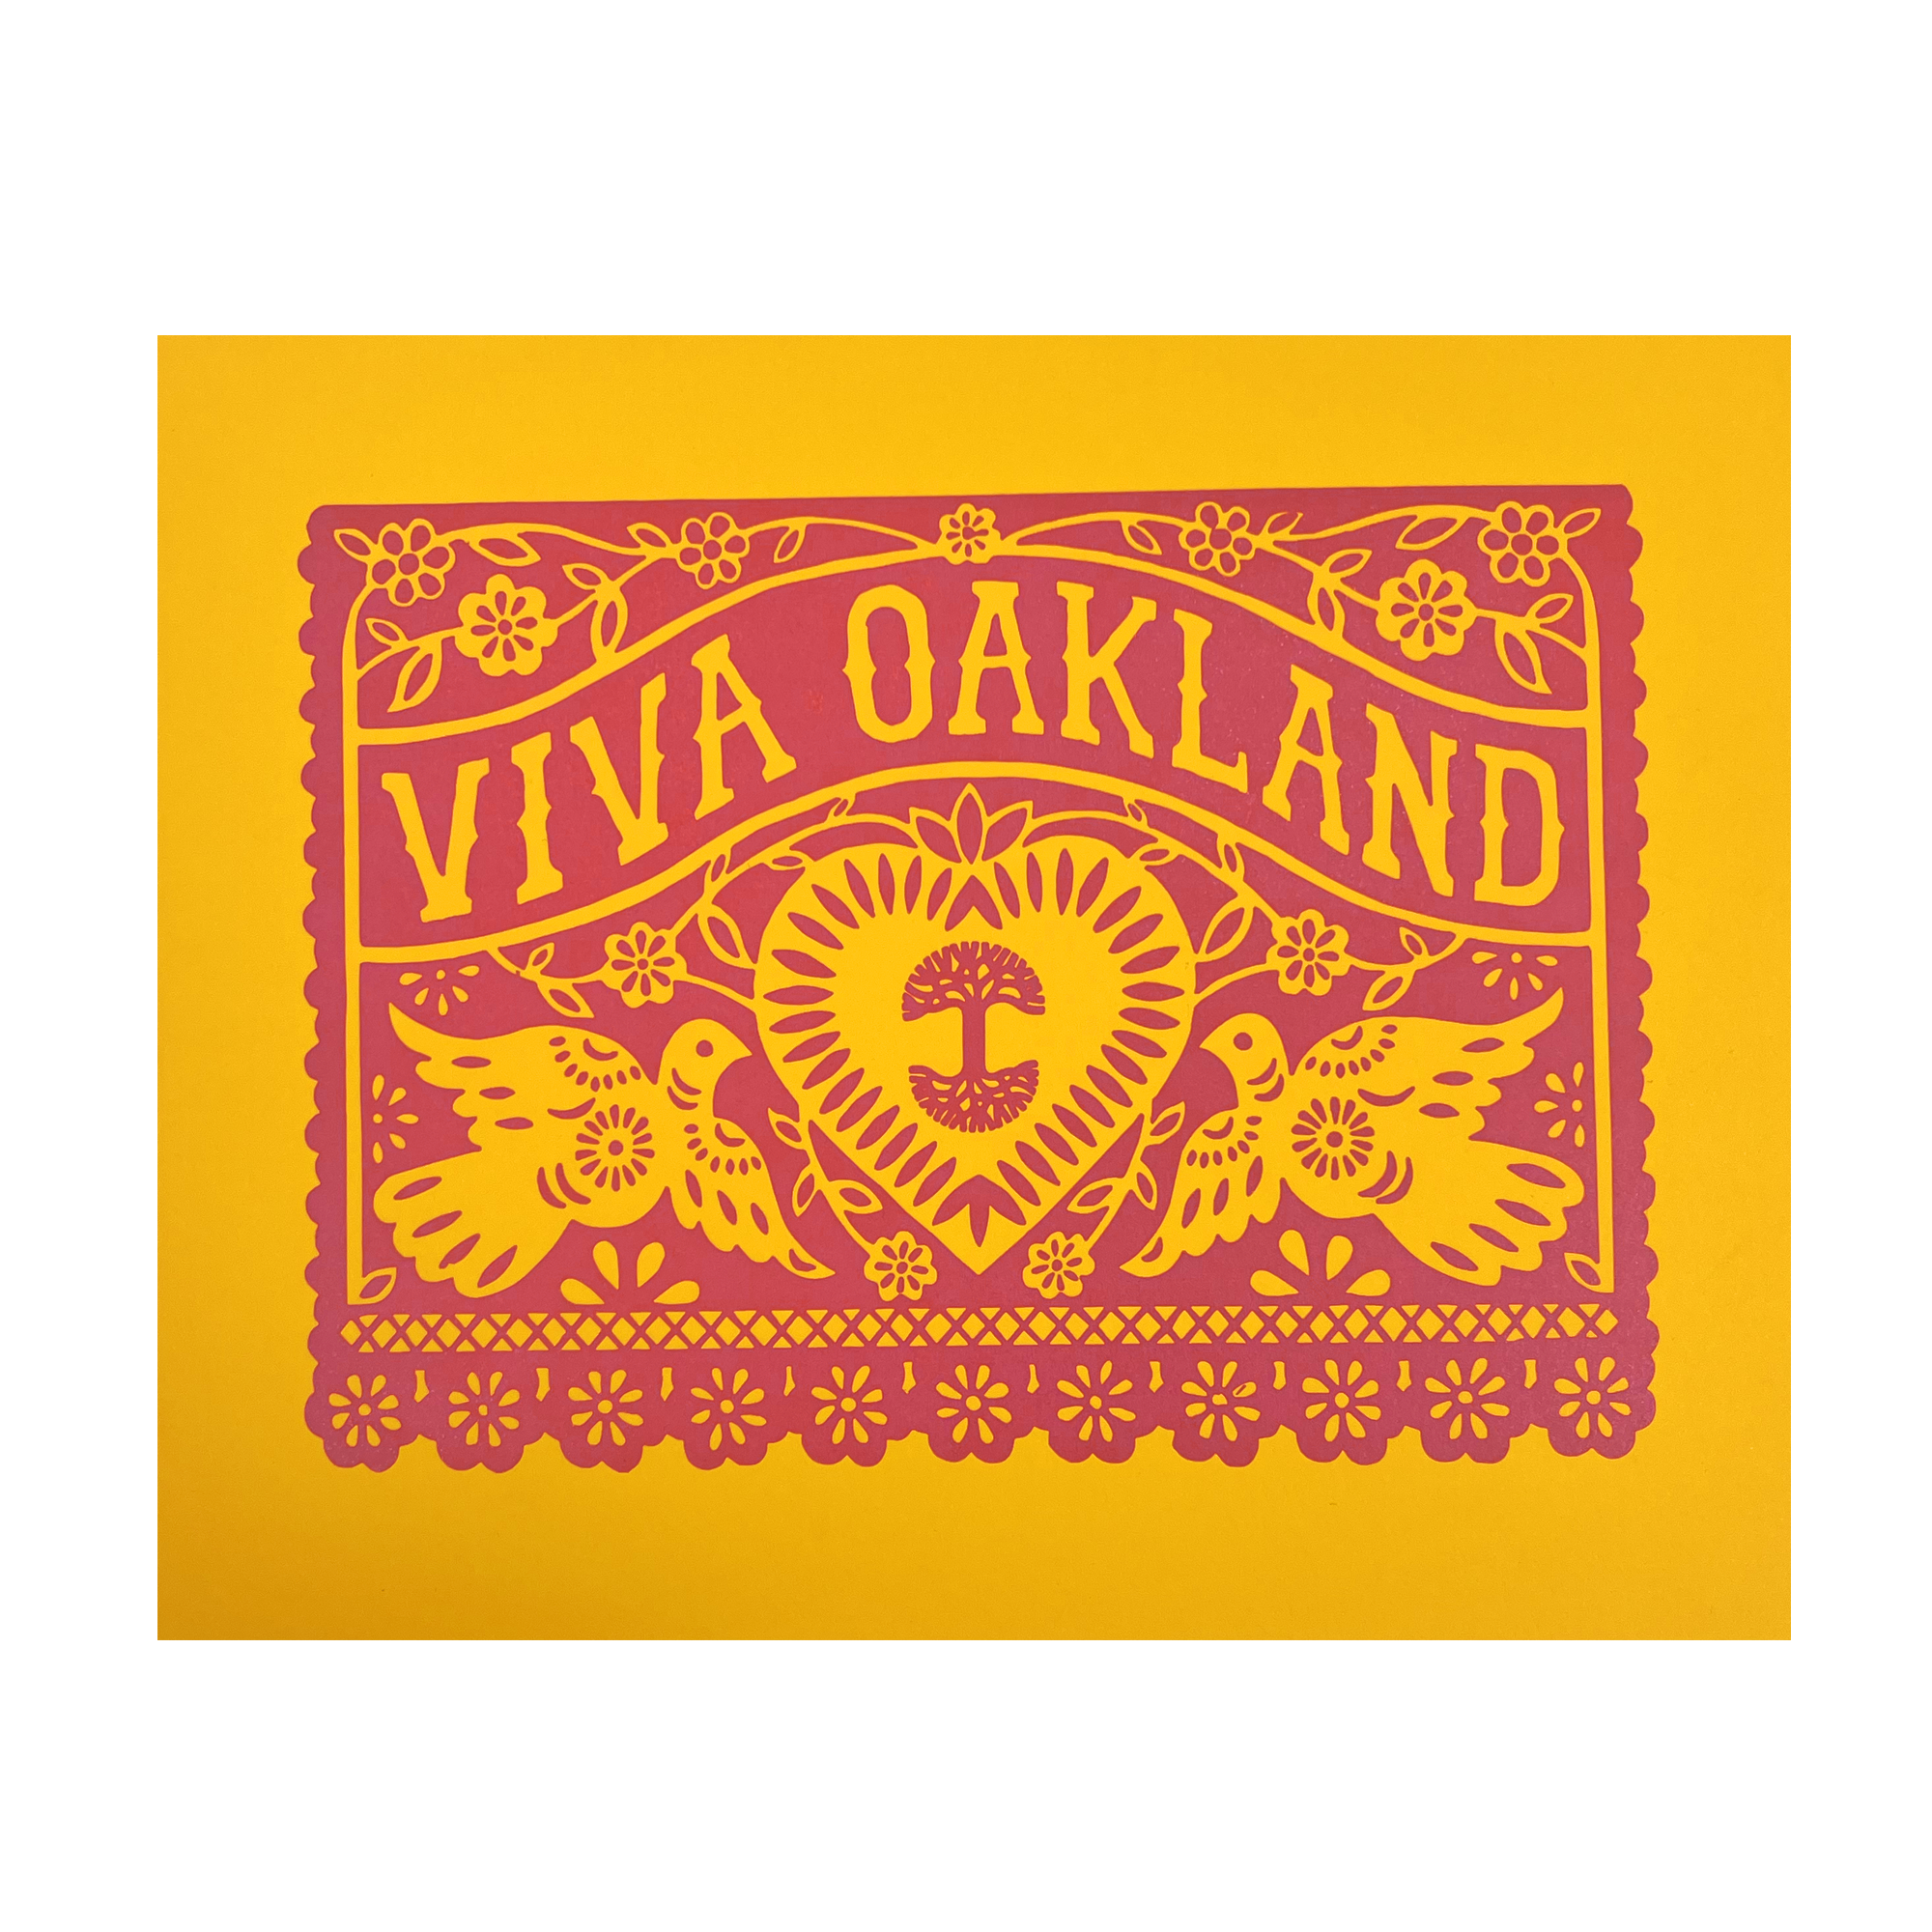 Bold yellow and red Vivia Oakland print.